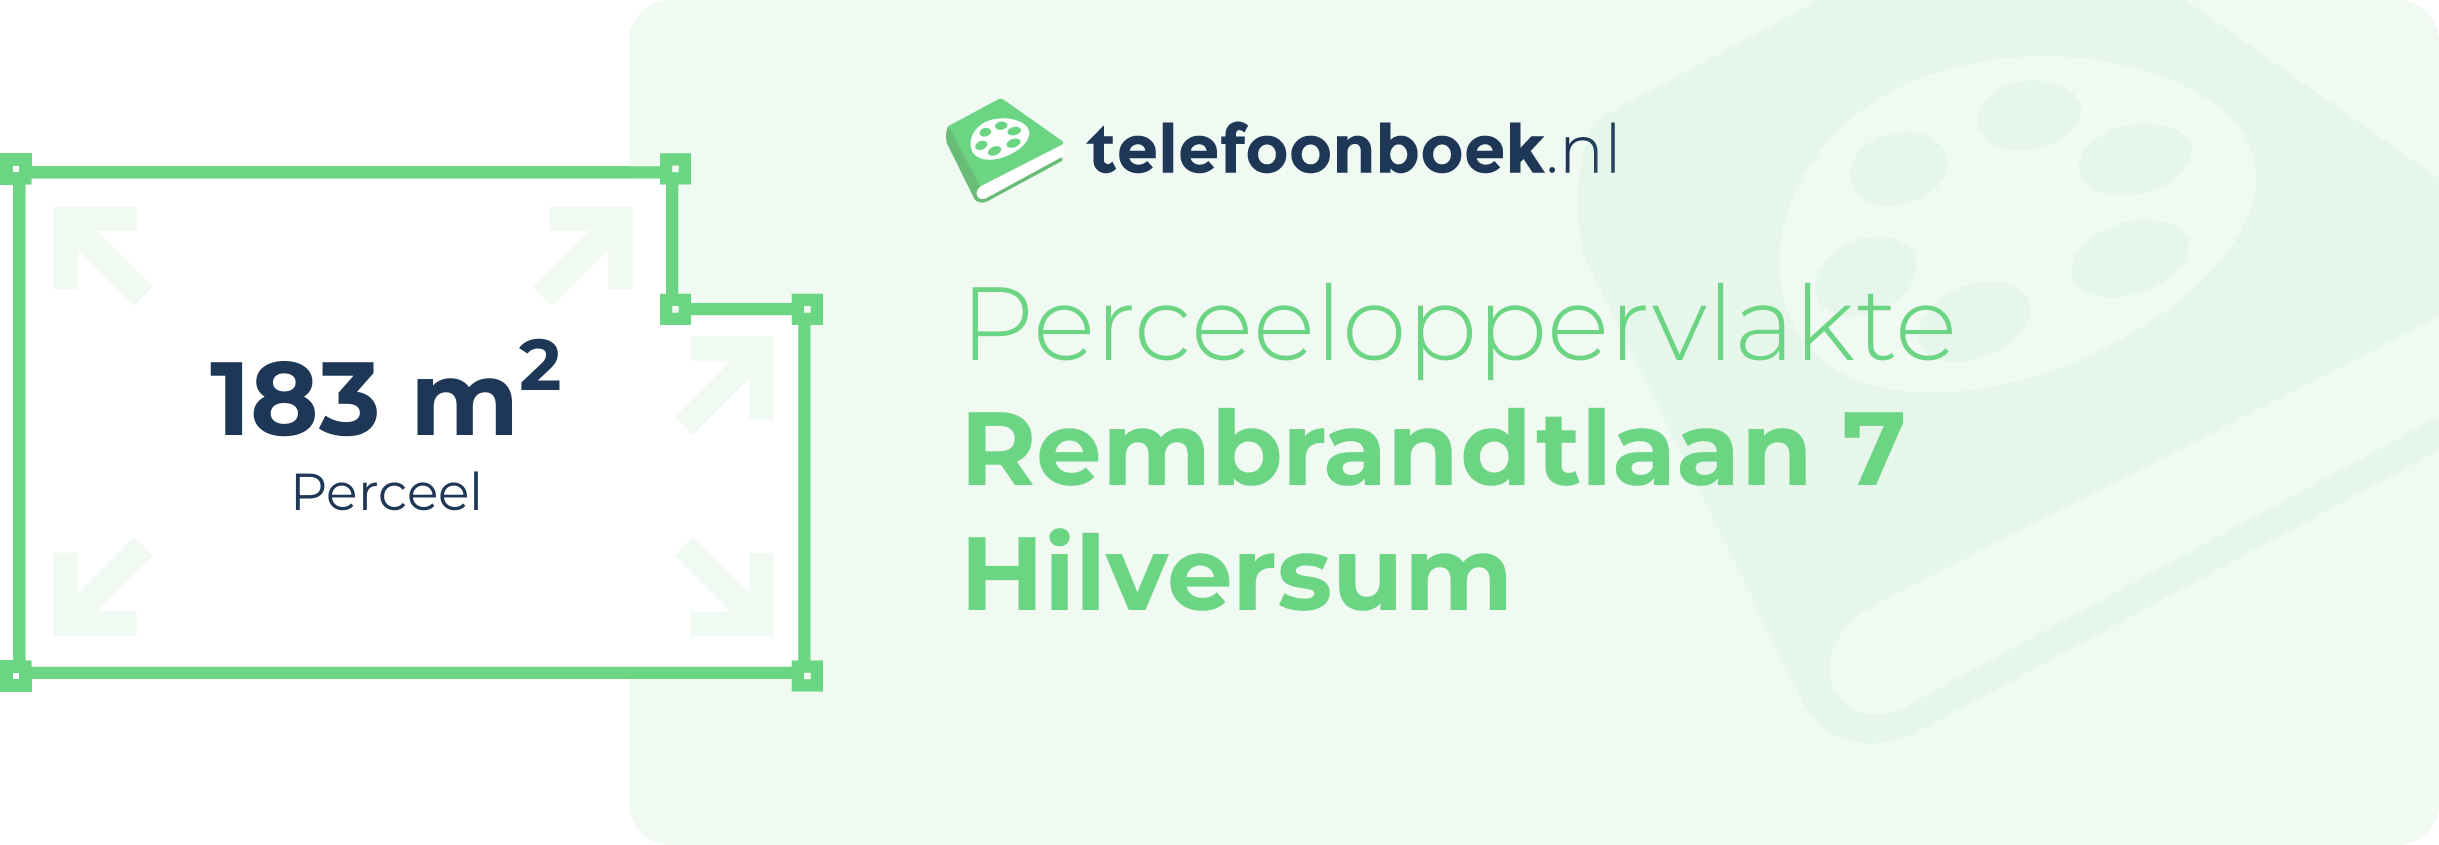 Perceeloppervlakte Rembrandtlaan 7 Hilversum